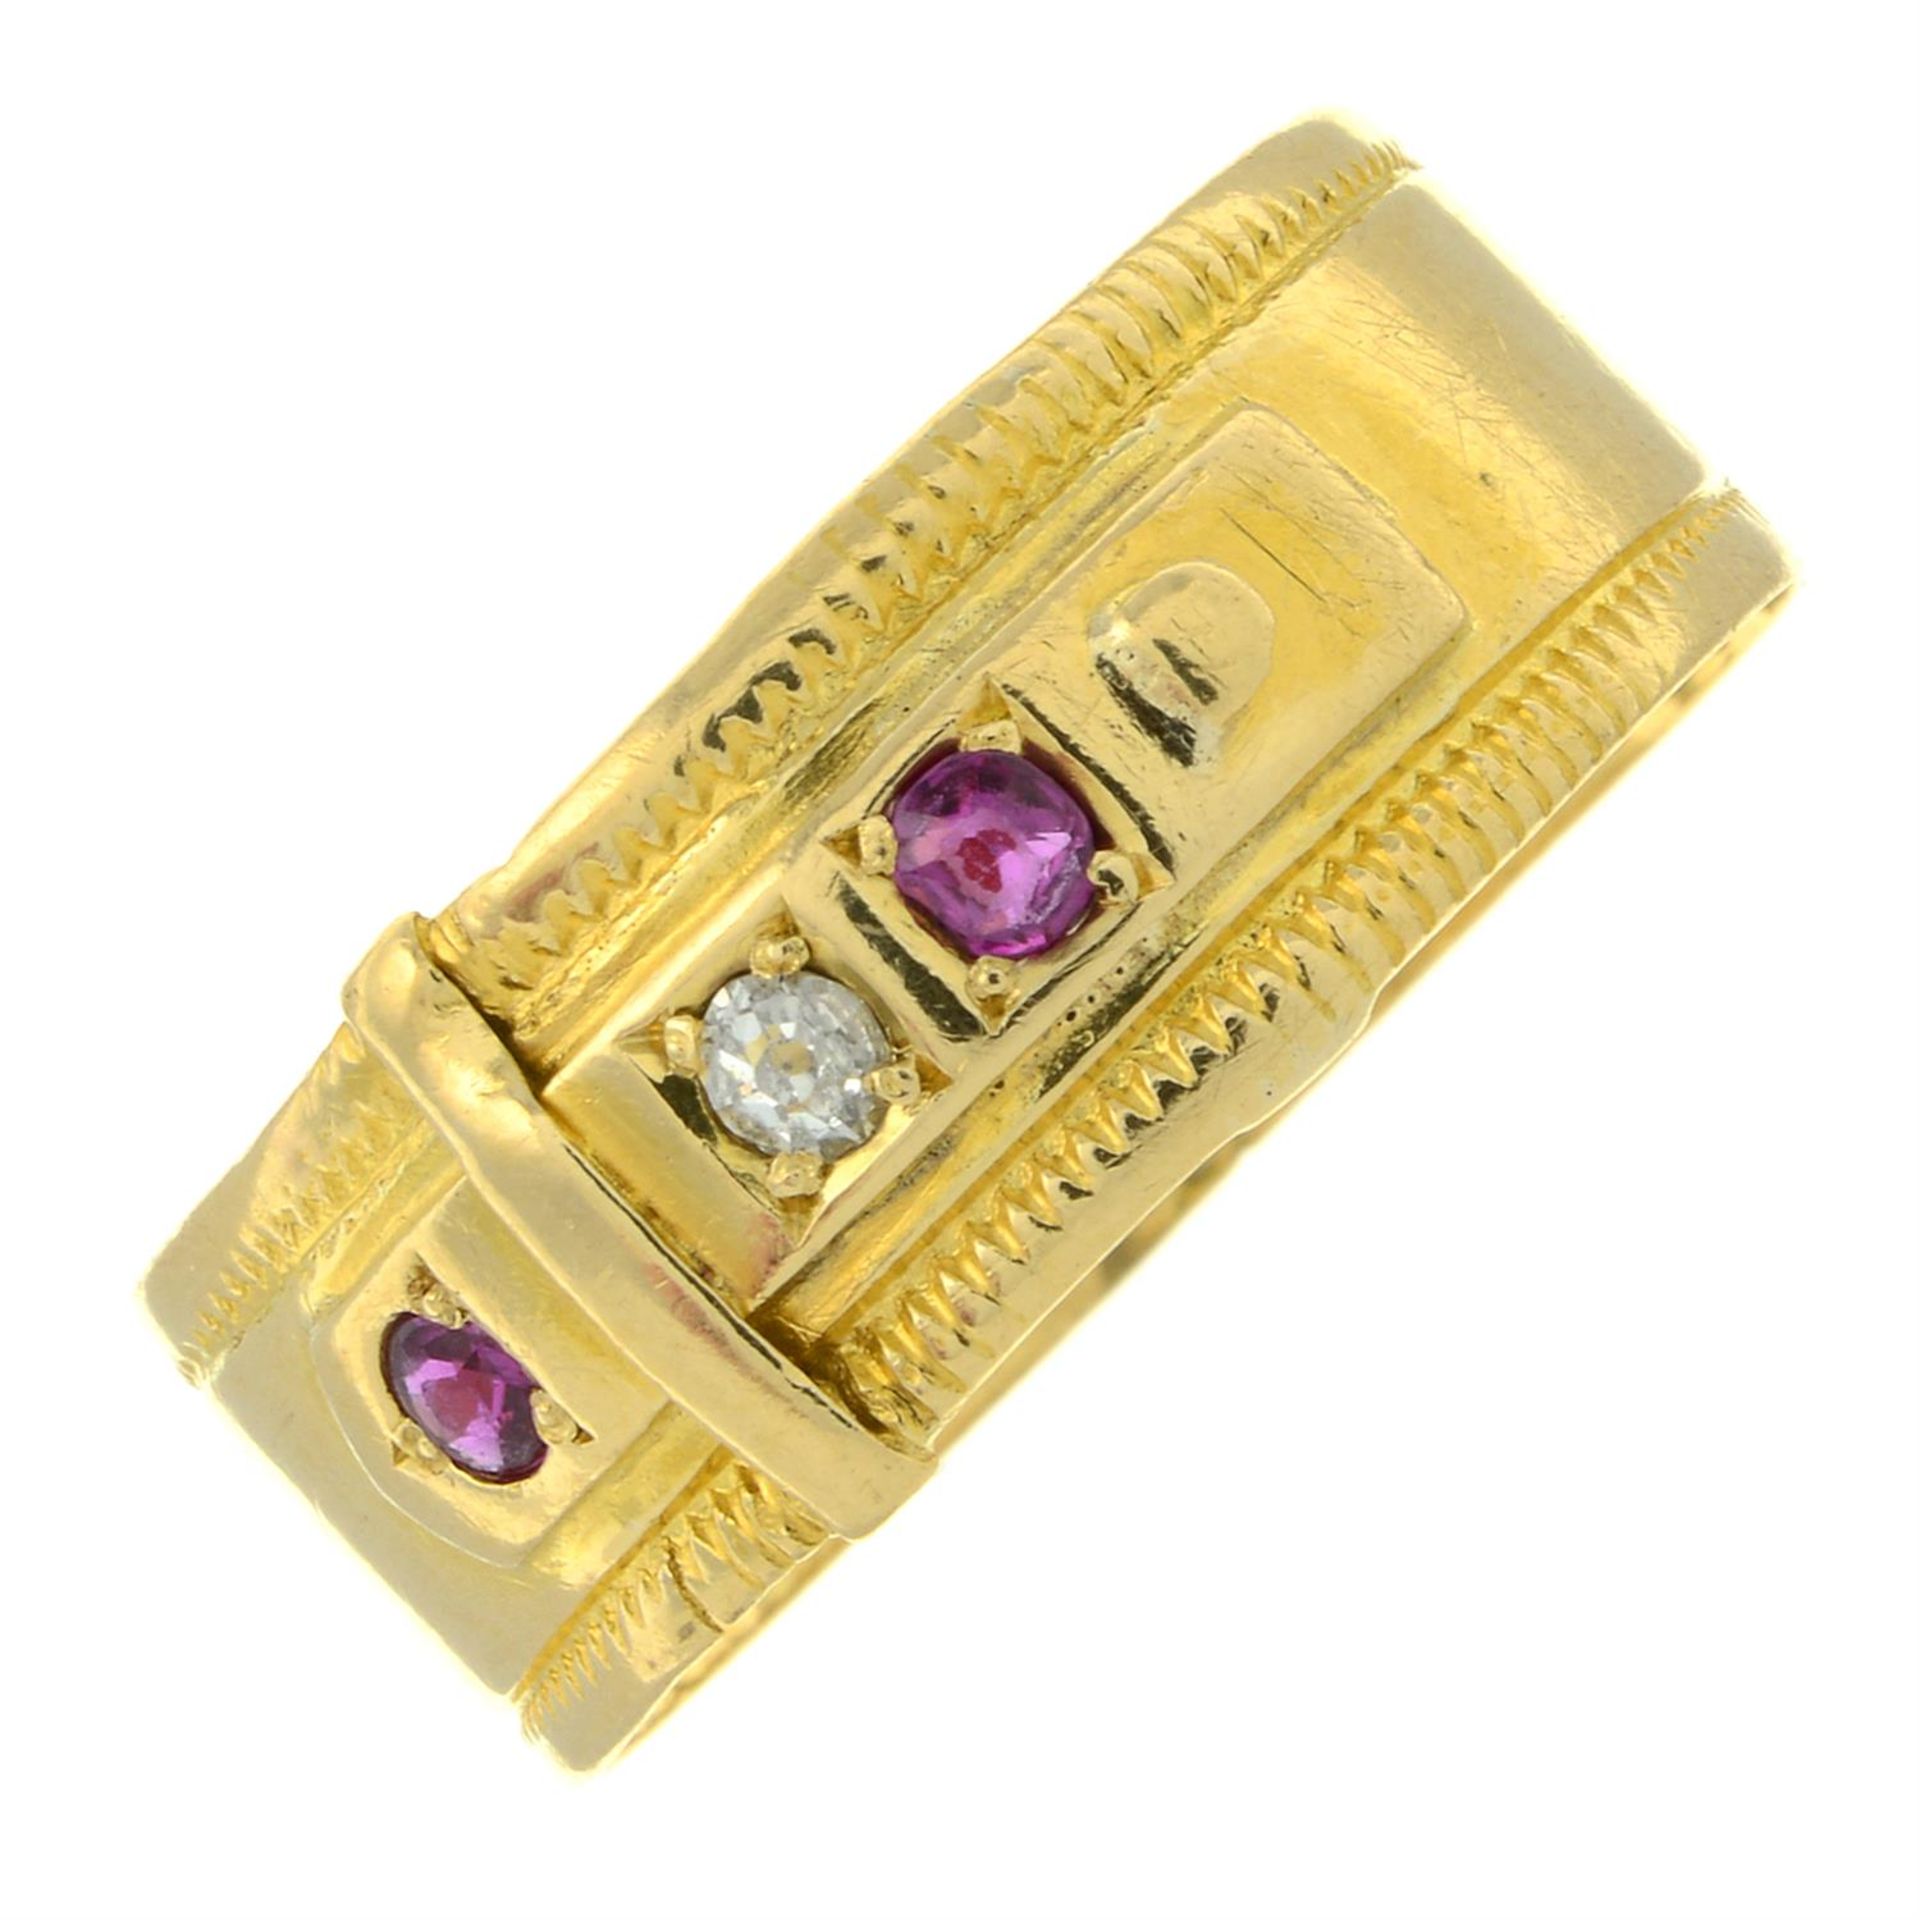 Edwardian 18ct gold gem ring